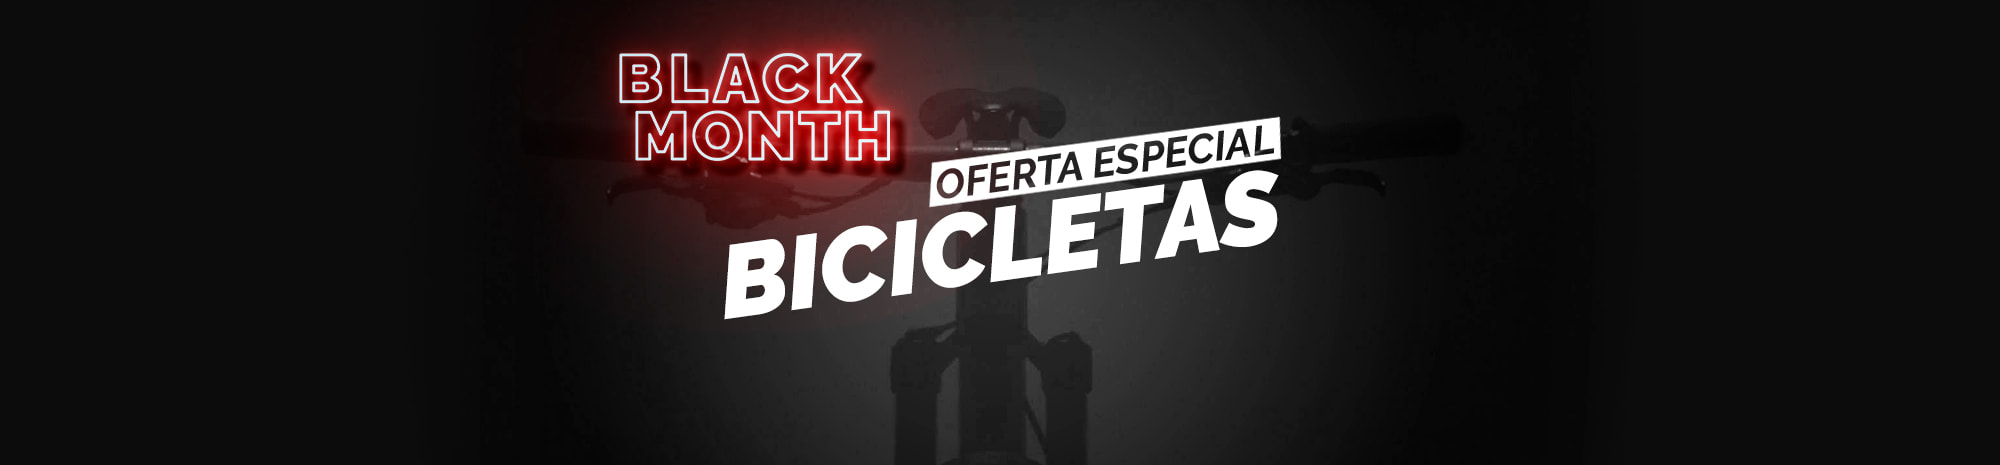 Oferta especial bicicletas Black Friday